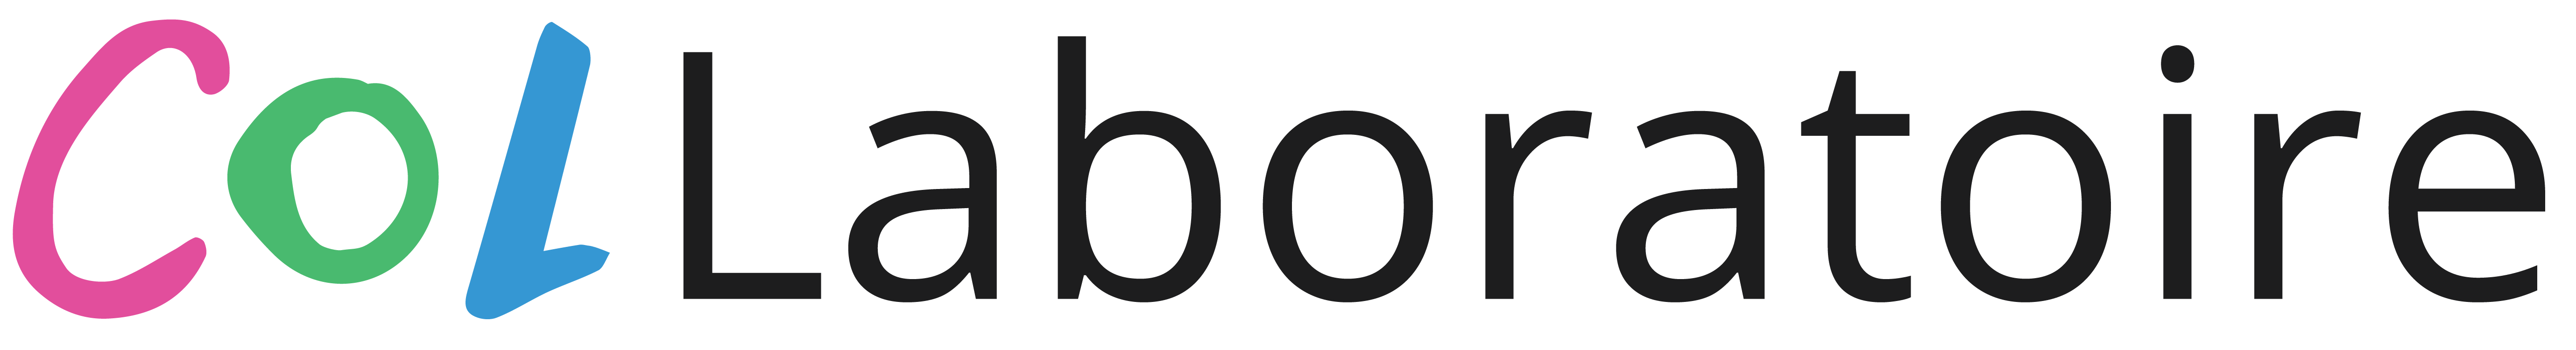 Collaboratoire Text Logo